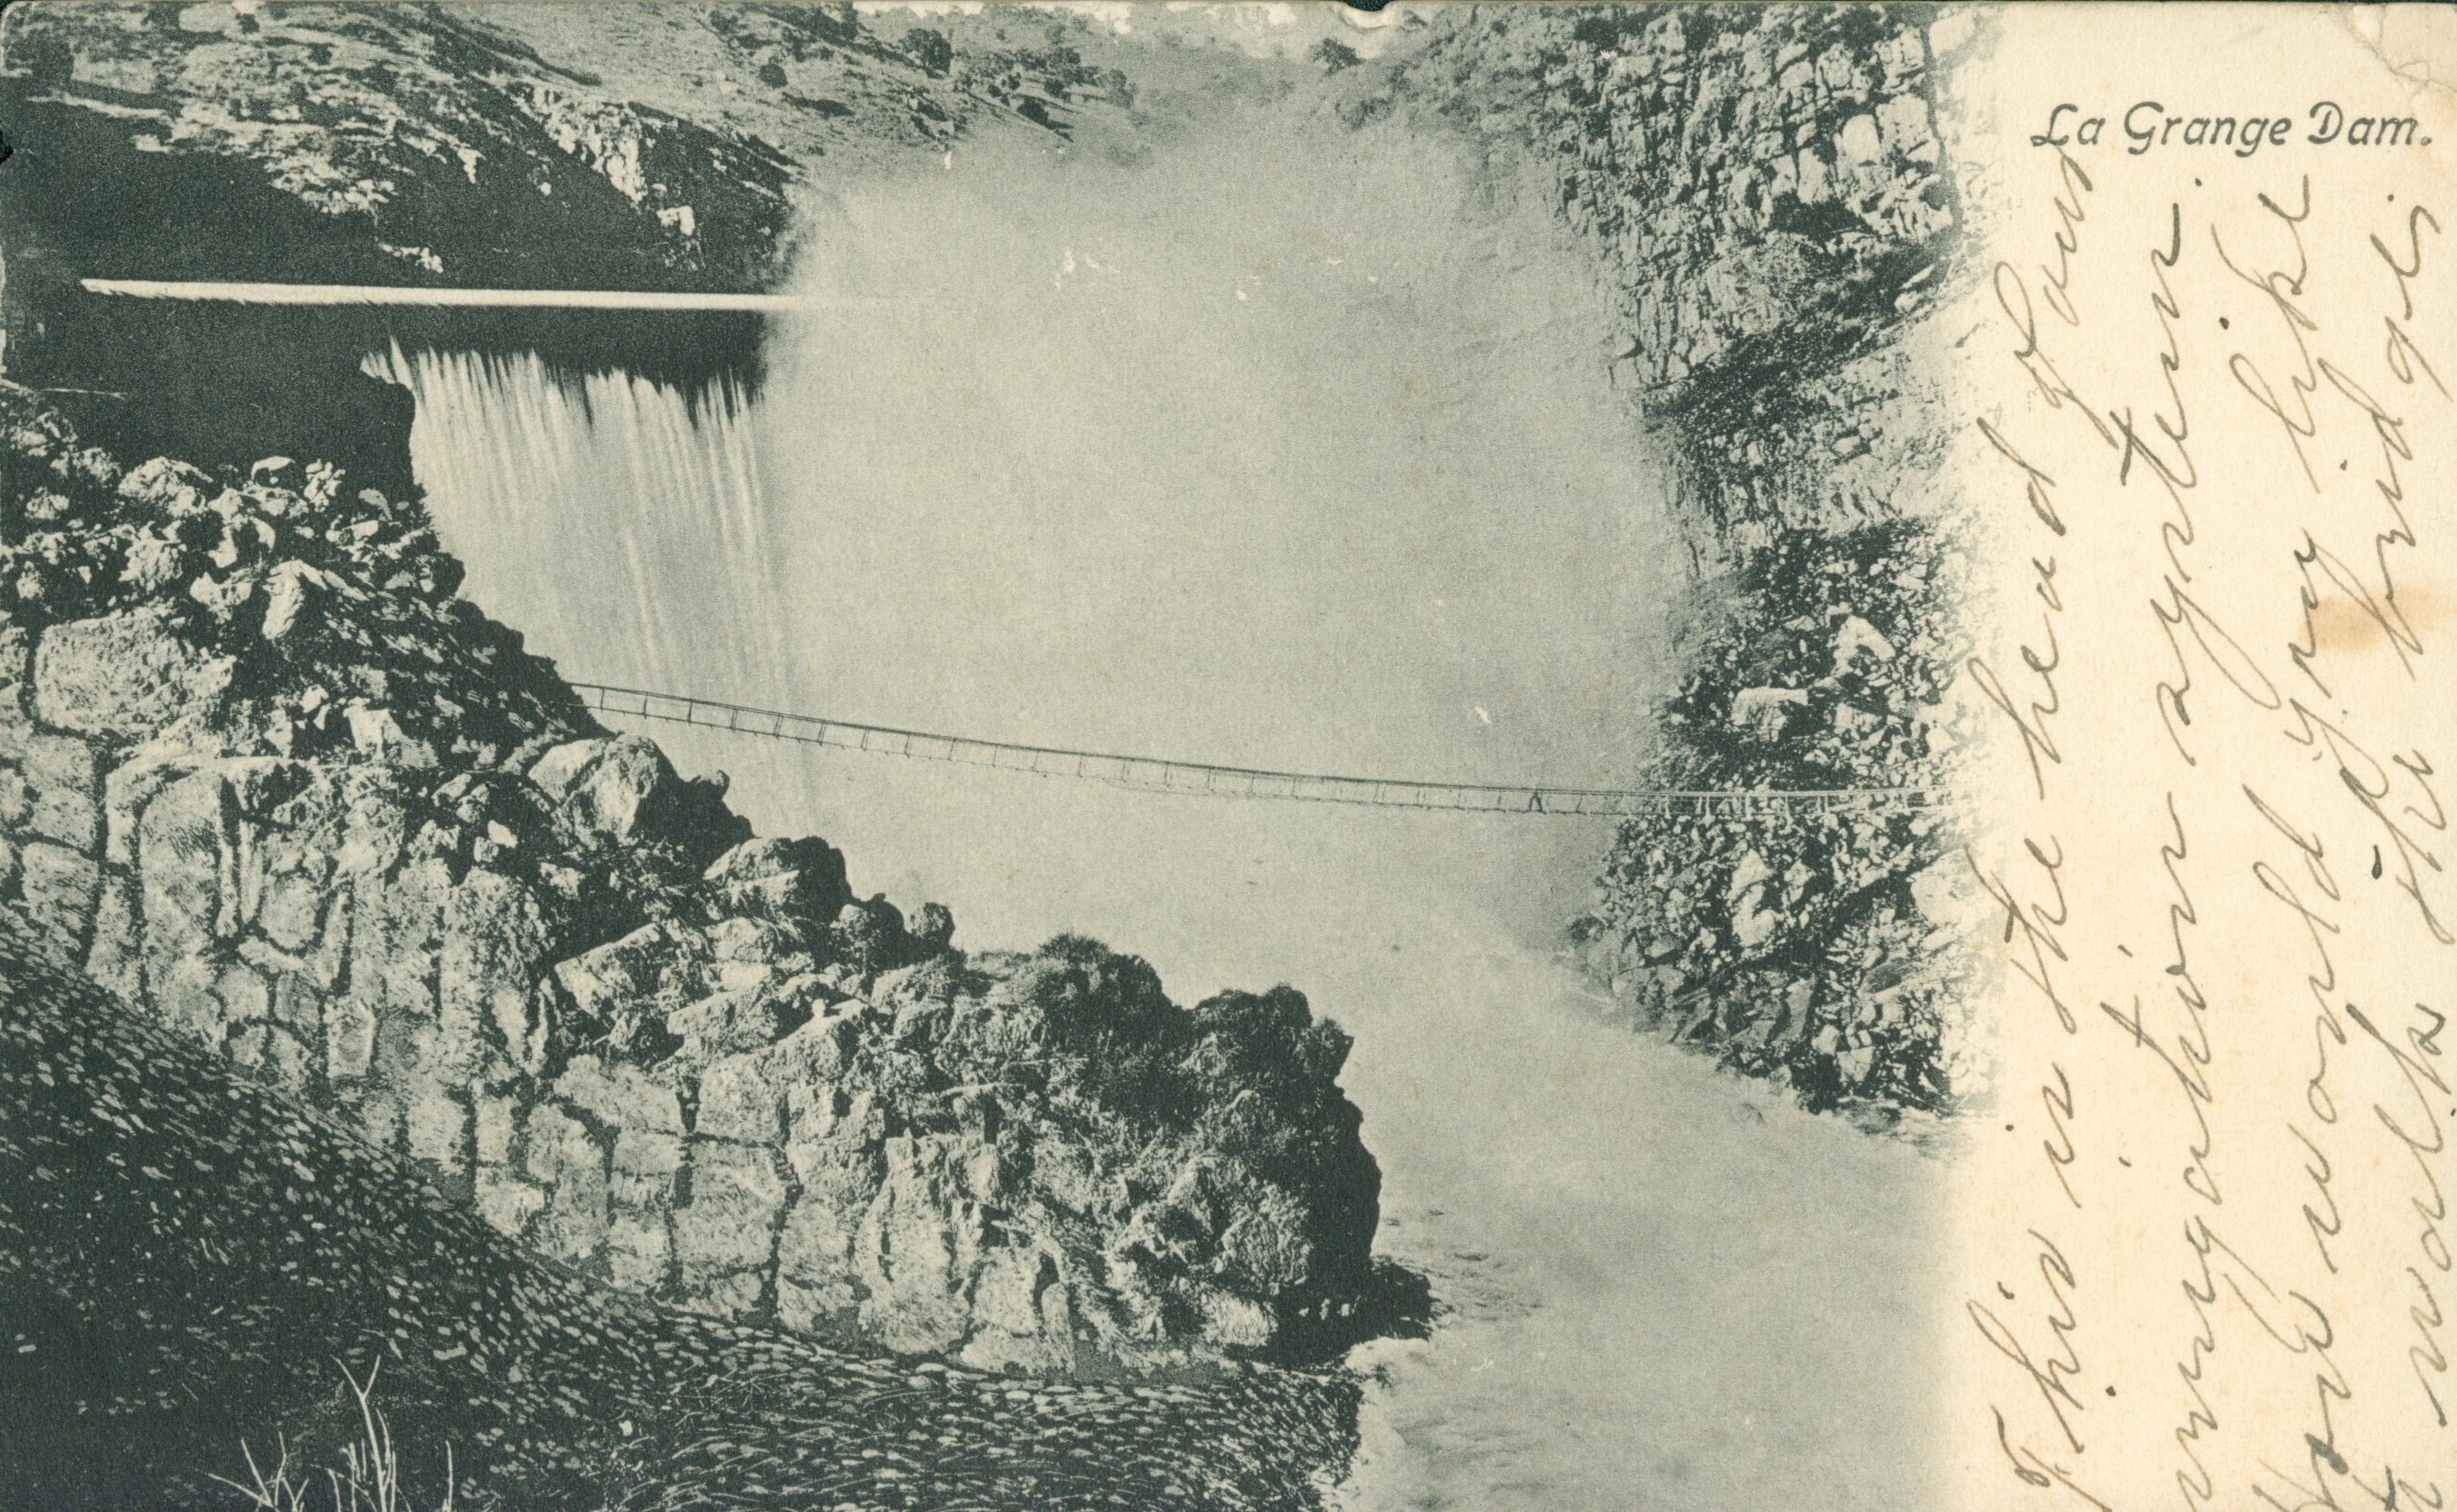 Shows La Grange dam releasing water